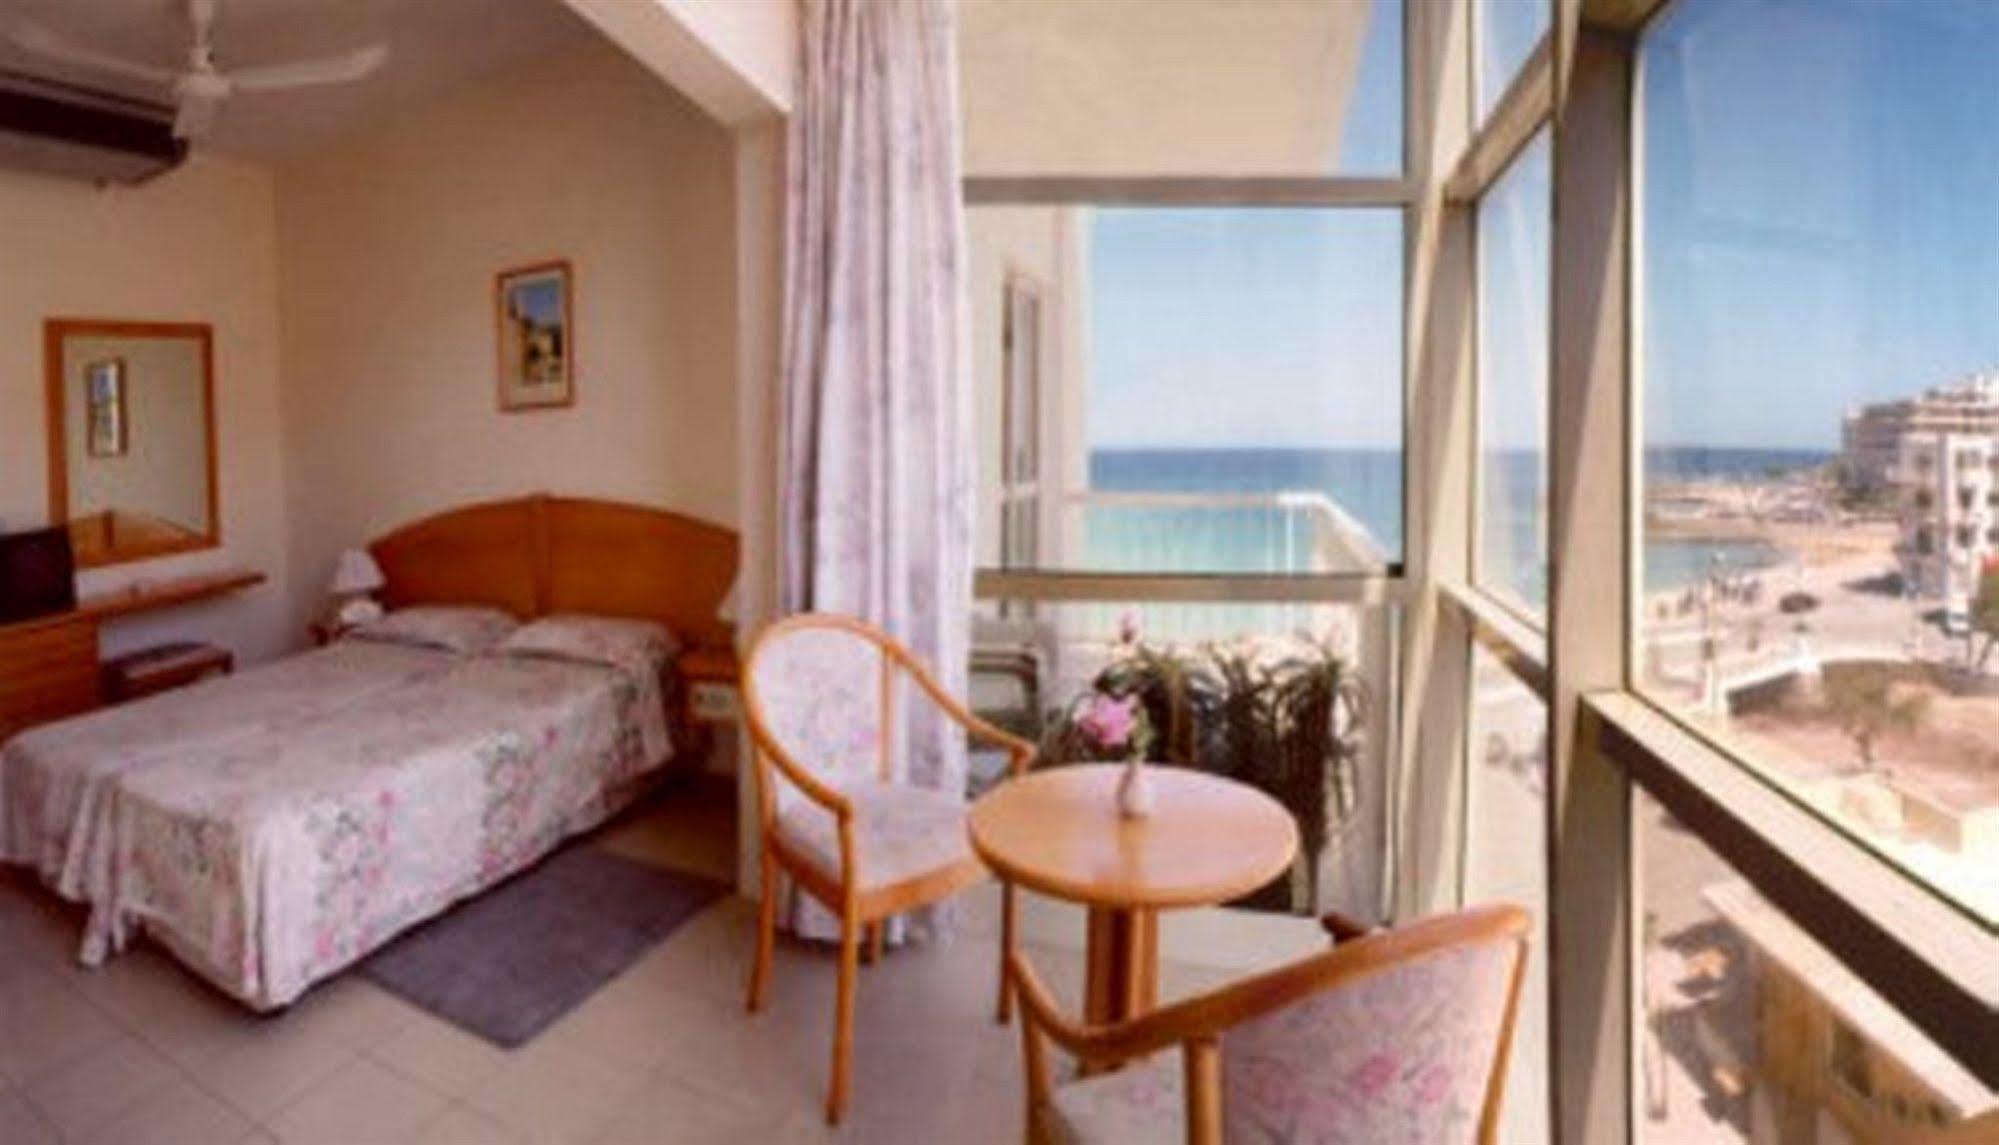 Il-Plajja Hotel Marsalforn Kültér fotó